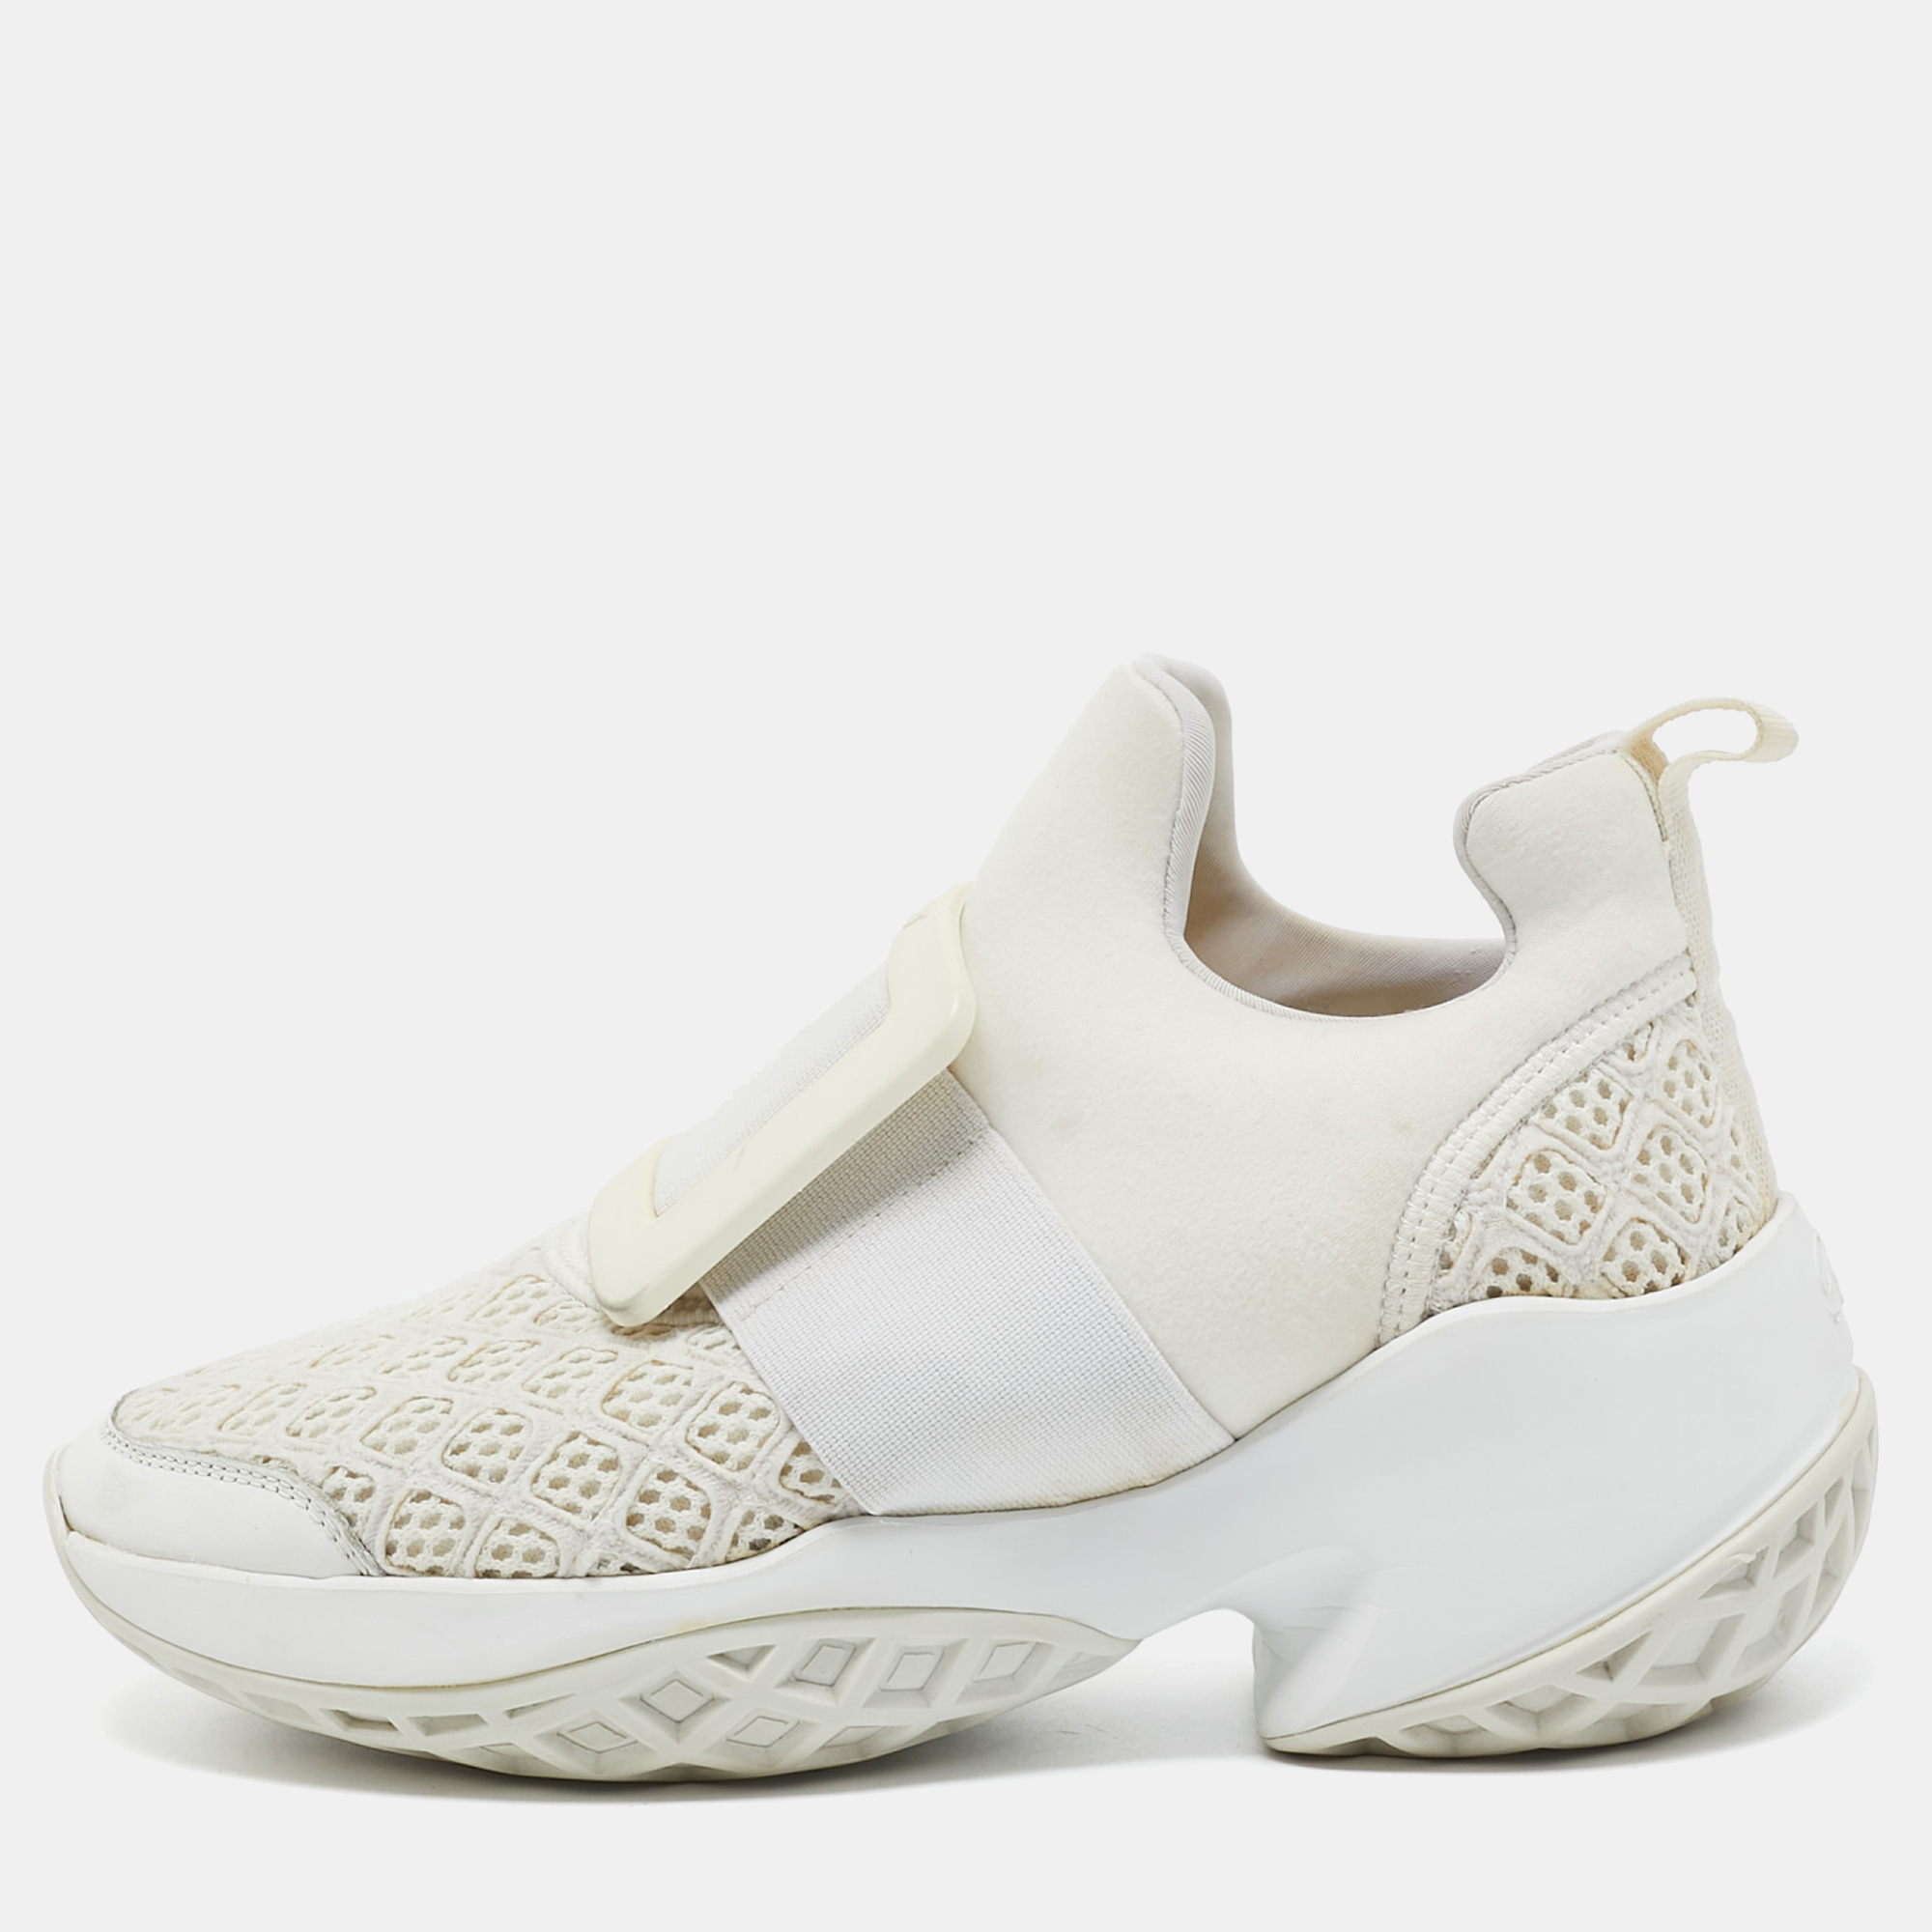 Roger vivier white neoprene and lace viv run sneakers size 35.5